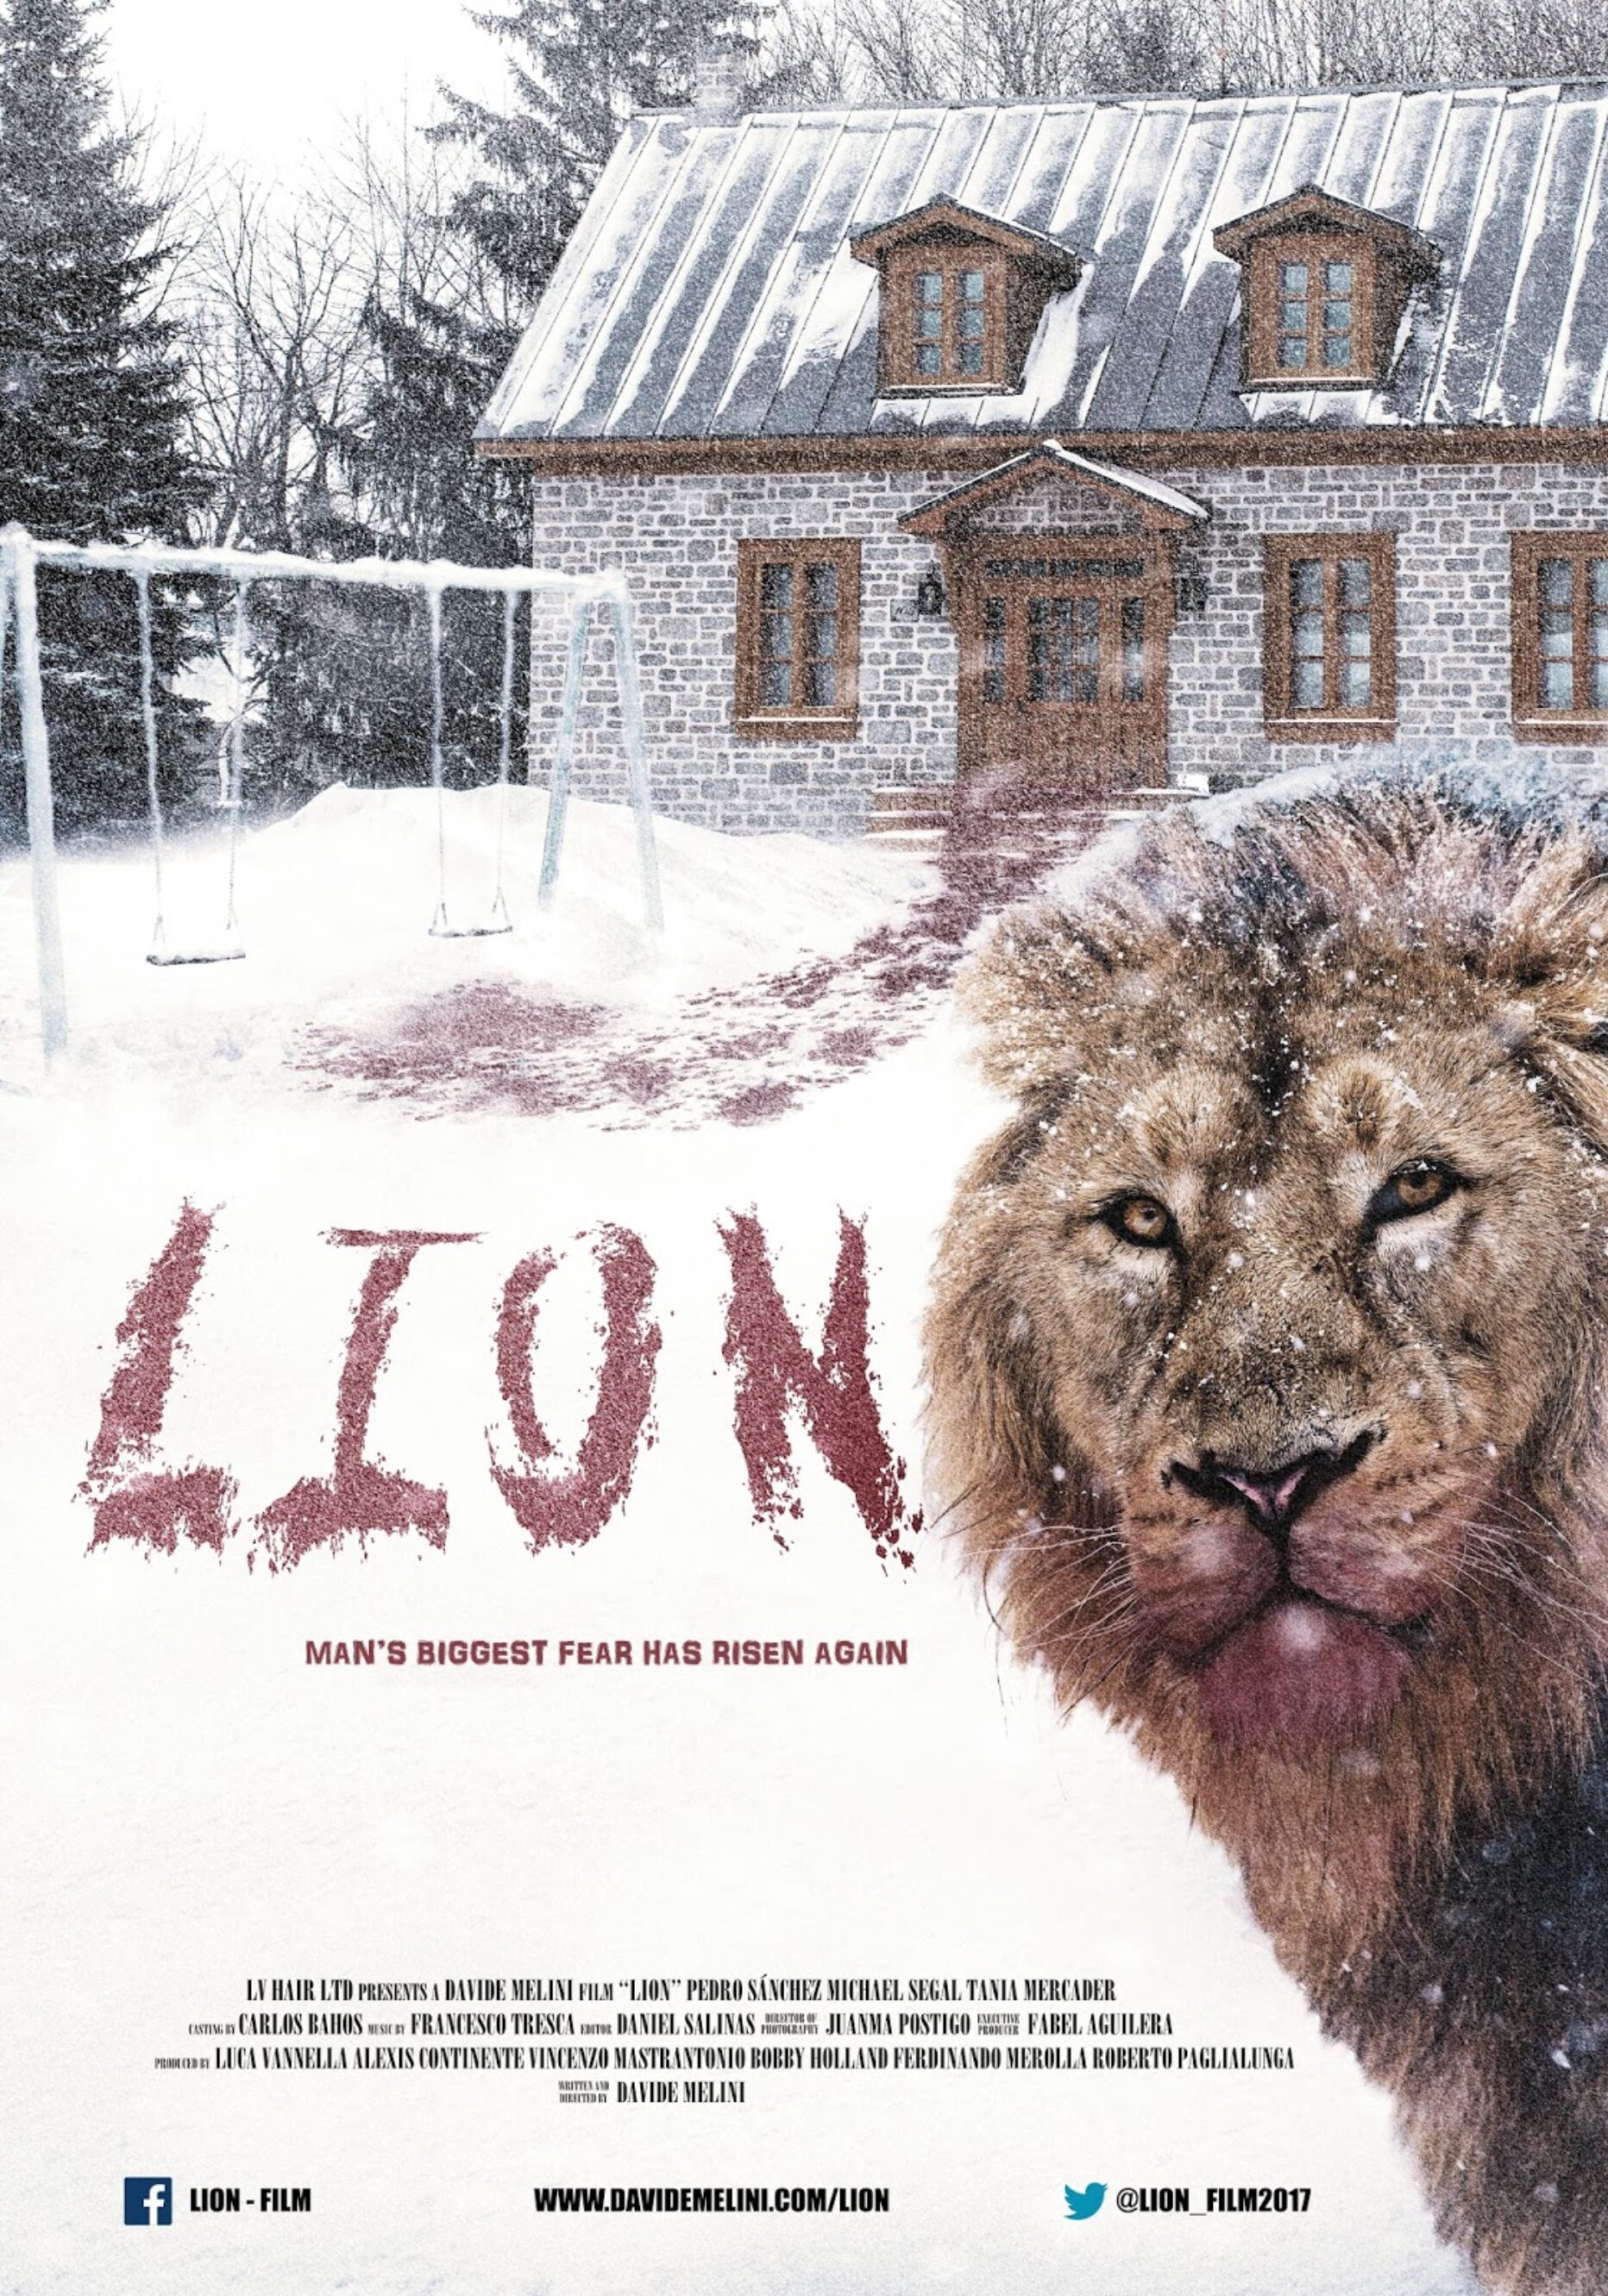 Tuesday Trailer #55: Lion